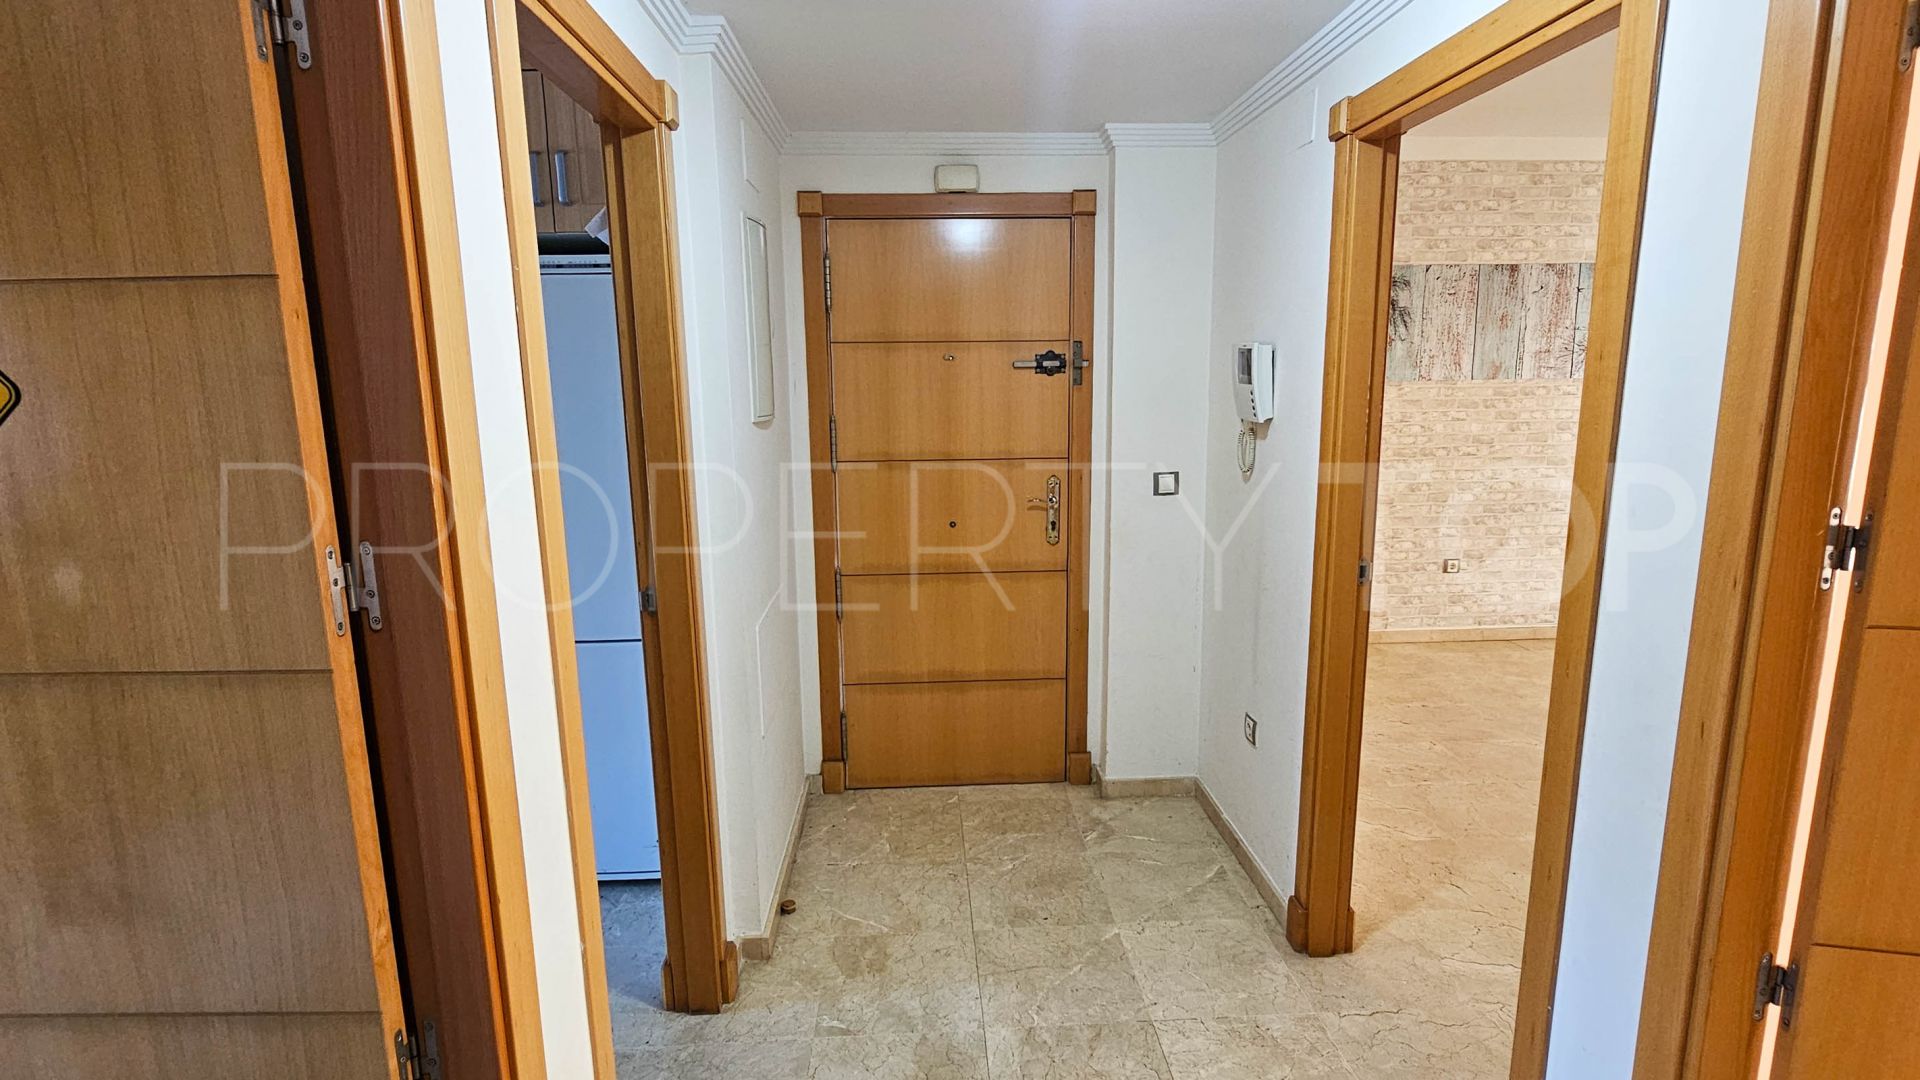 2 bedrooms ground floor apartment in Sabinillas for sale